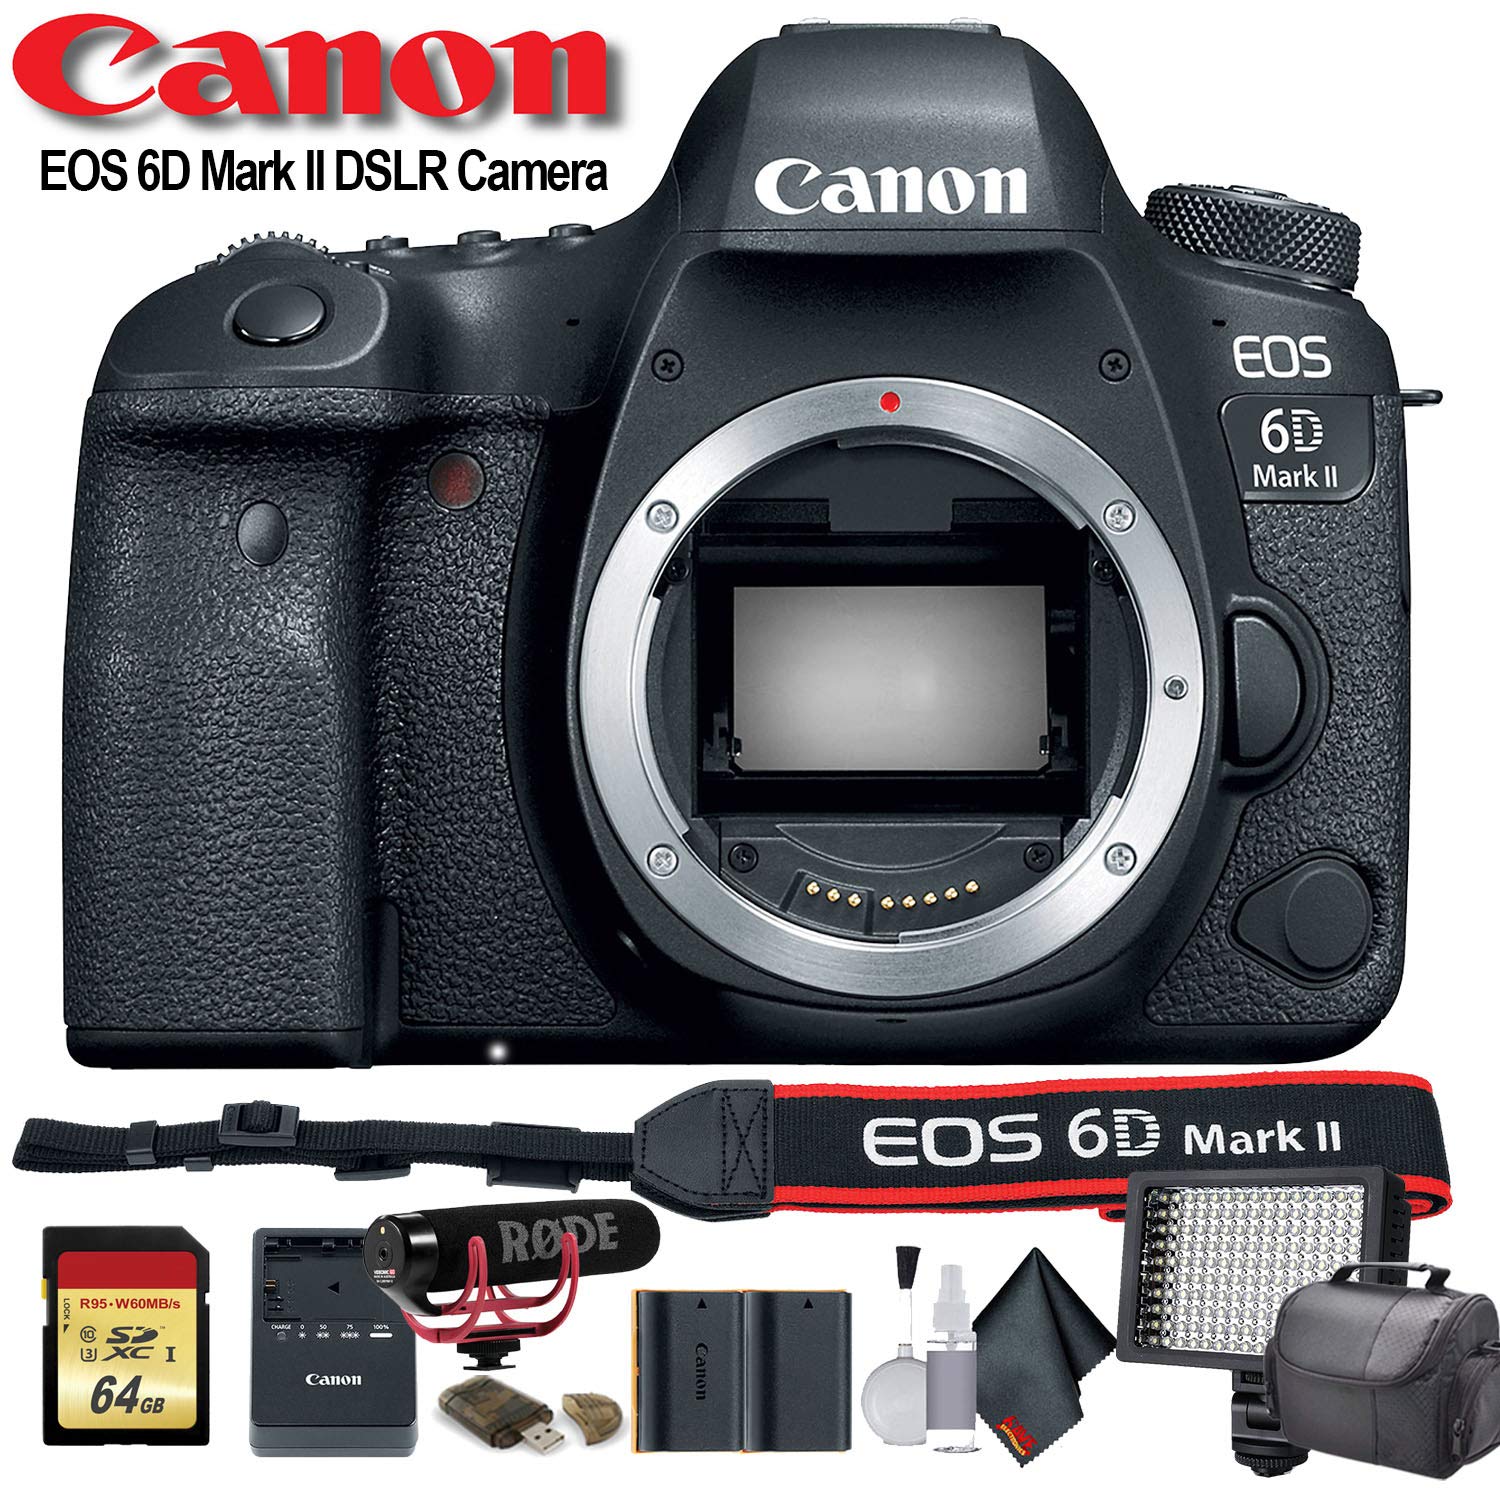 Canon EOS 6D Mark II DSLR Camera (International Model) (1897C002) W/Bag, Extra Battery, LED Light, Mic, Filters Bundle